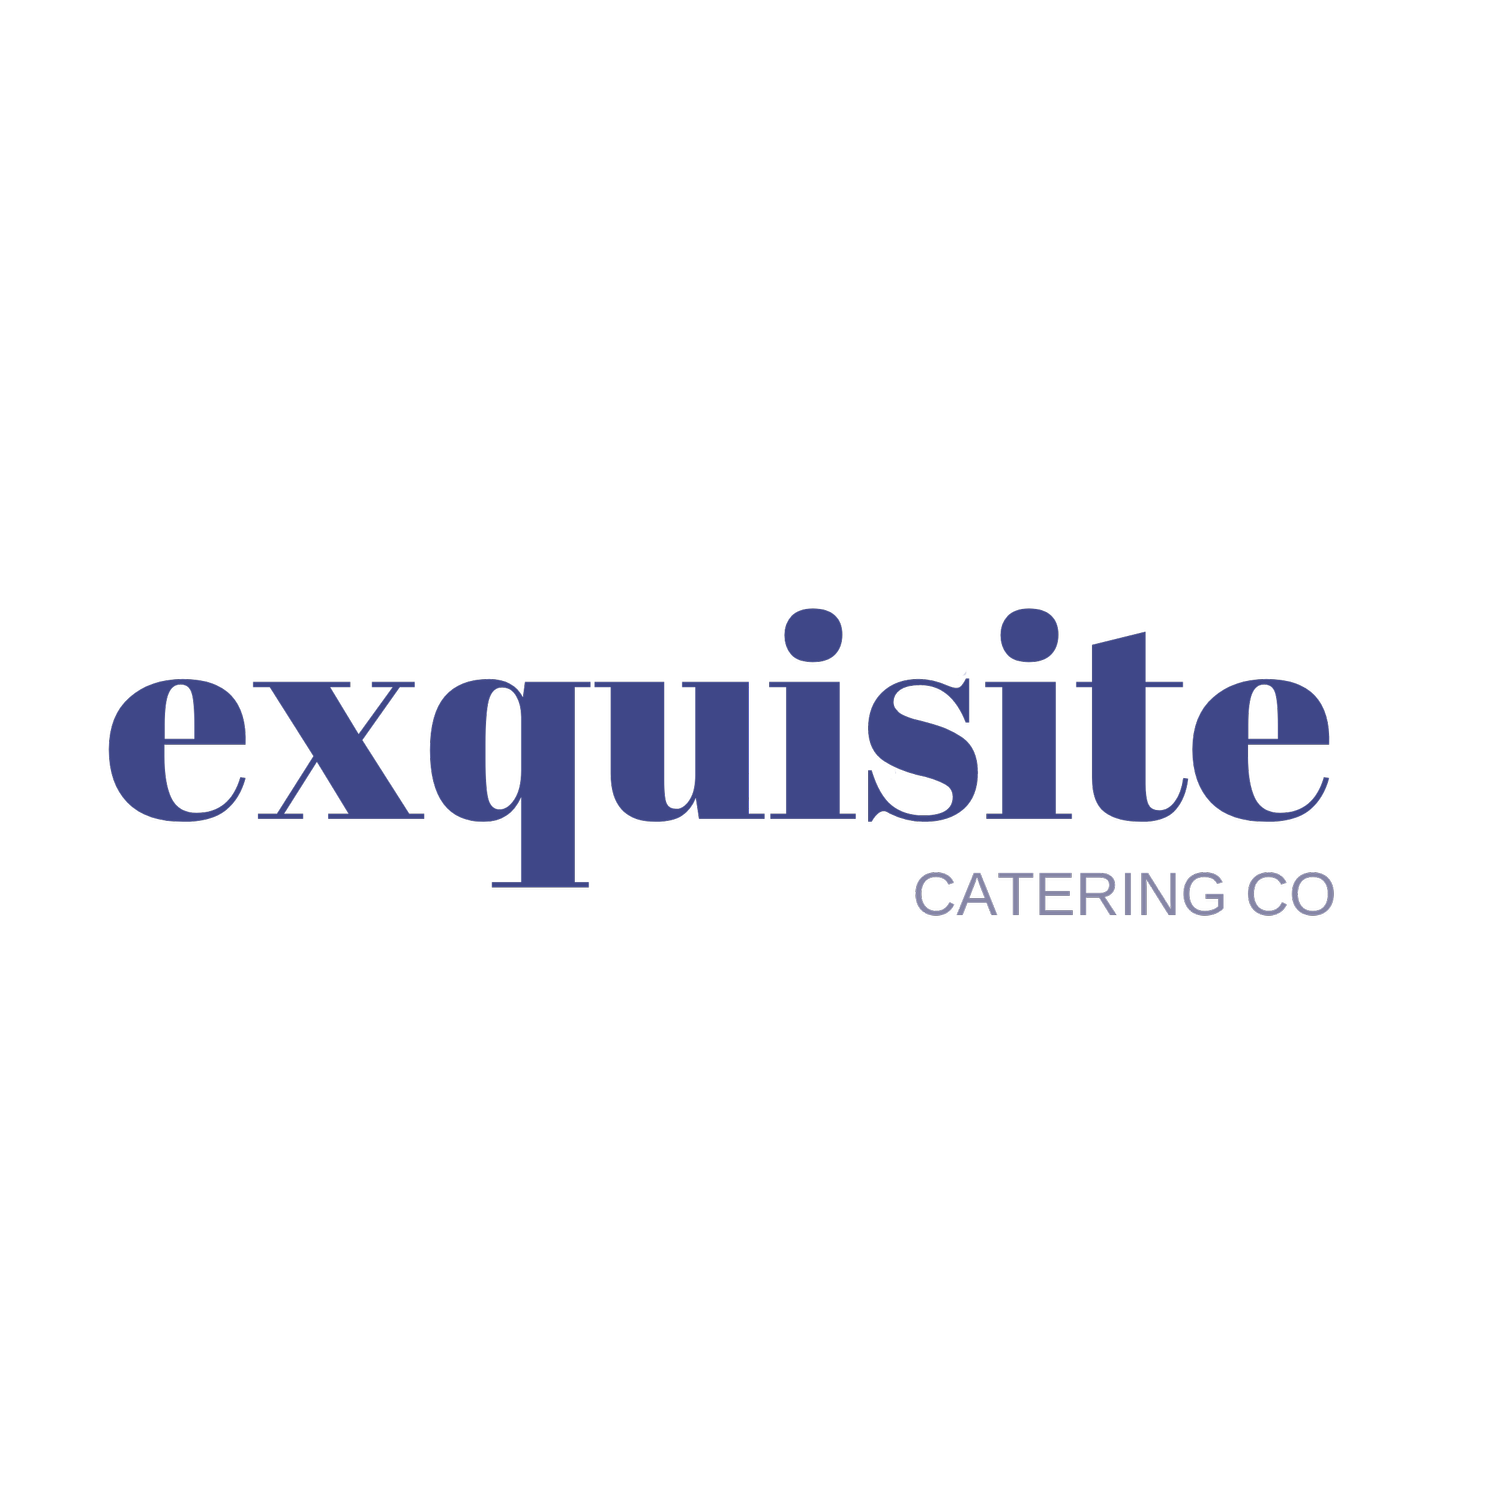 Exquisite Catering Co